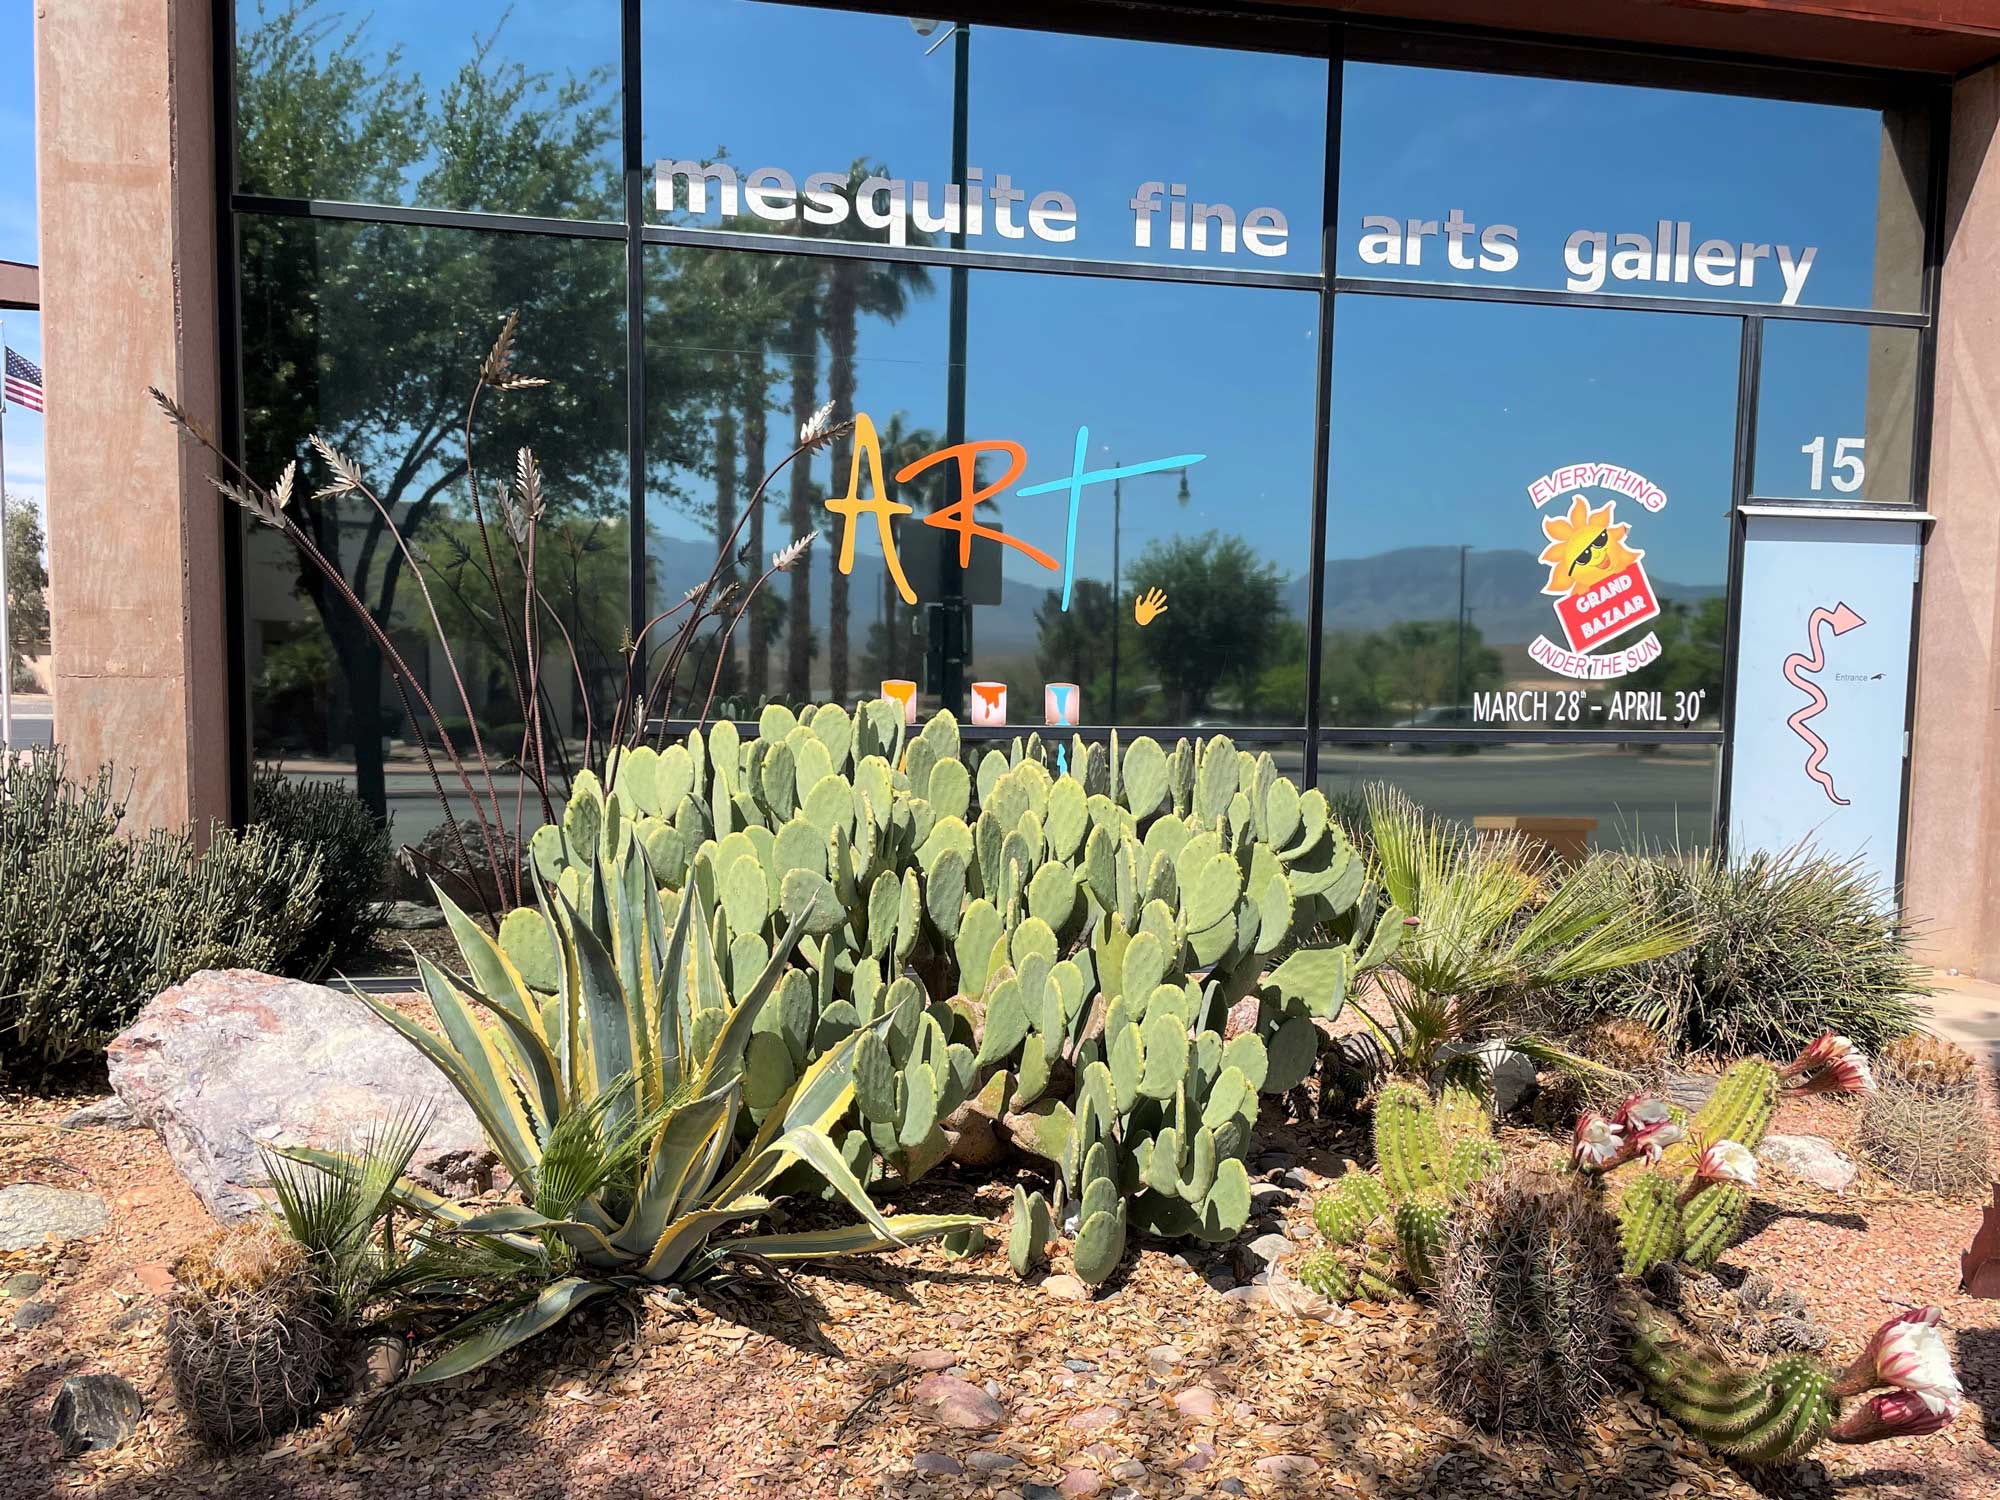 The Mesquite Fine Arts Gallery